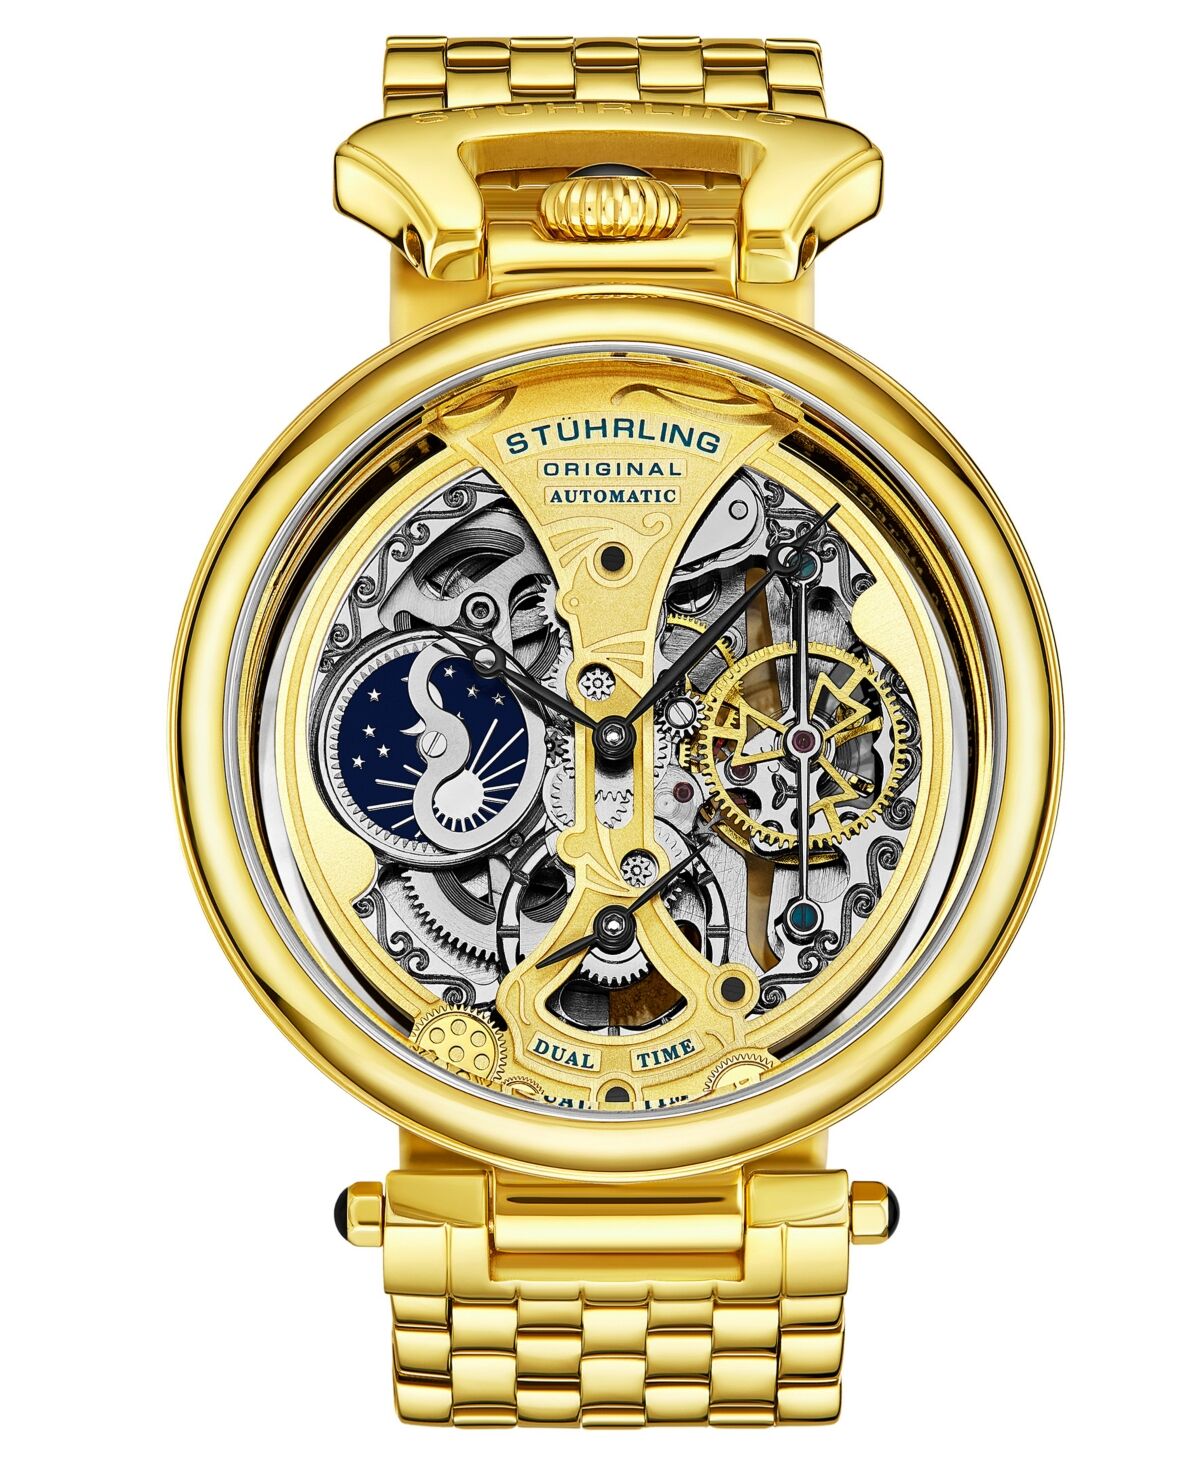 Stuhrling Men's Automatic Gold-Tone Link Bracelet Watch 46mm - Yellow